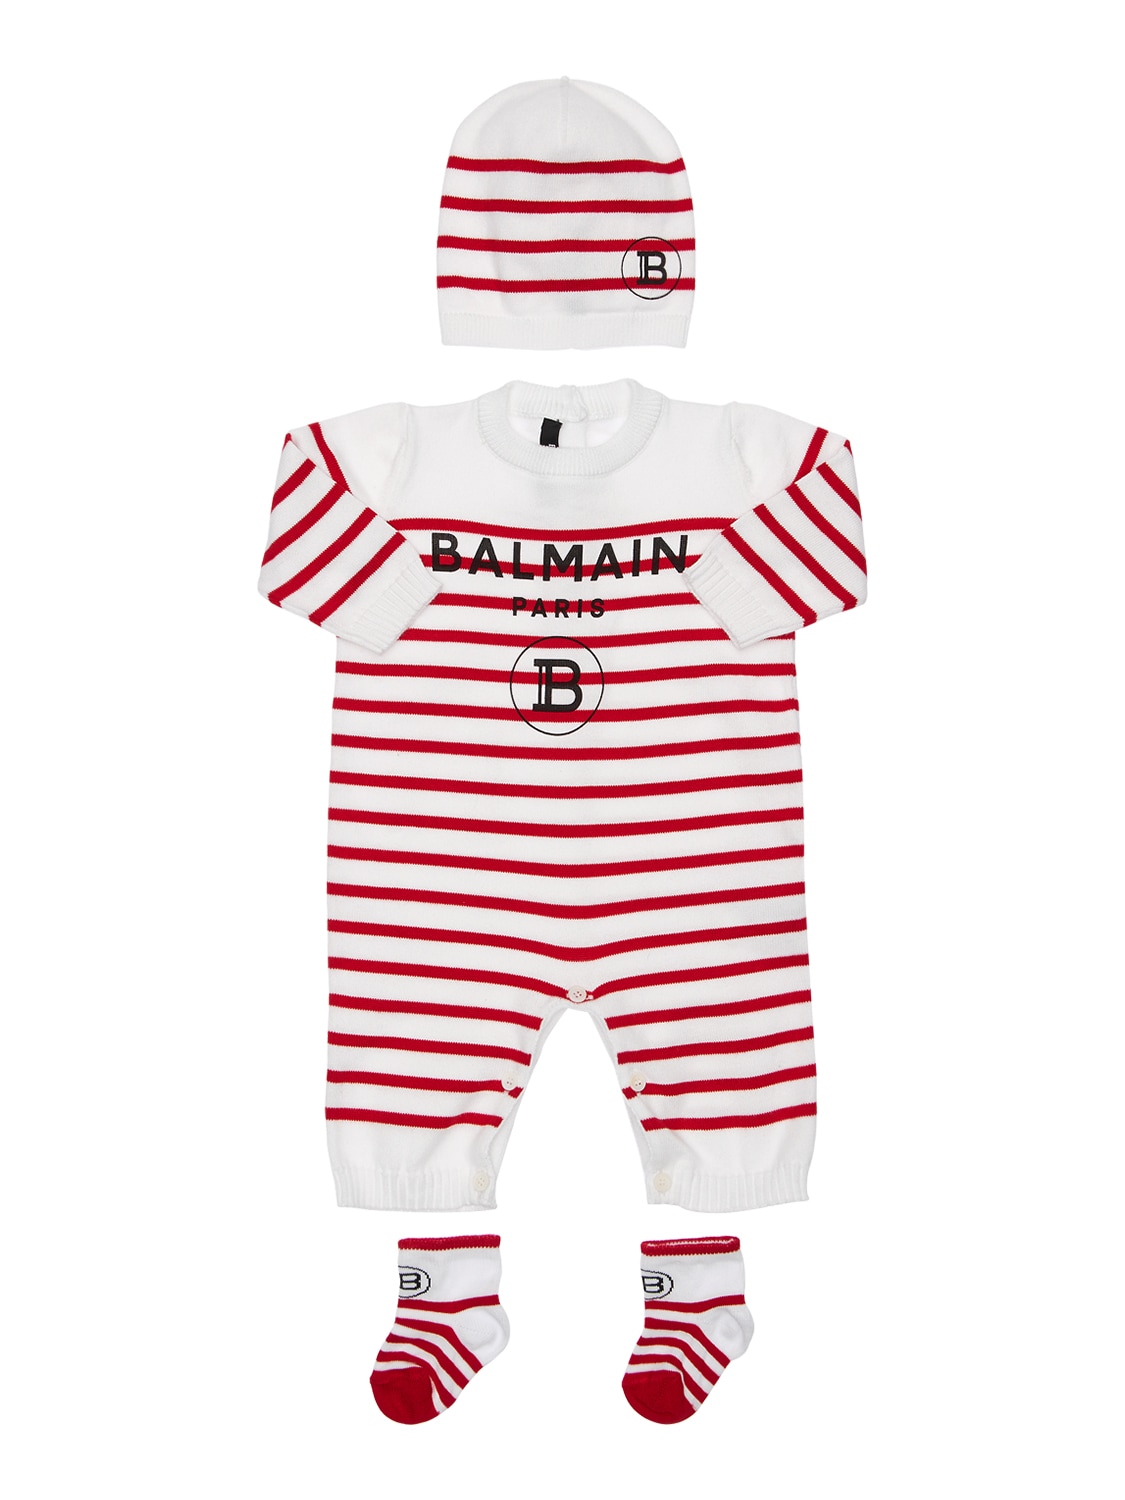 Balmain Babies' Stripes Knit Cotton Romper, Hat & Socks In White,red